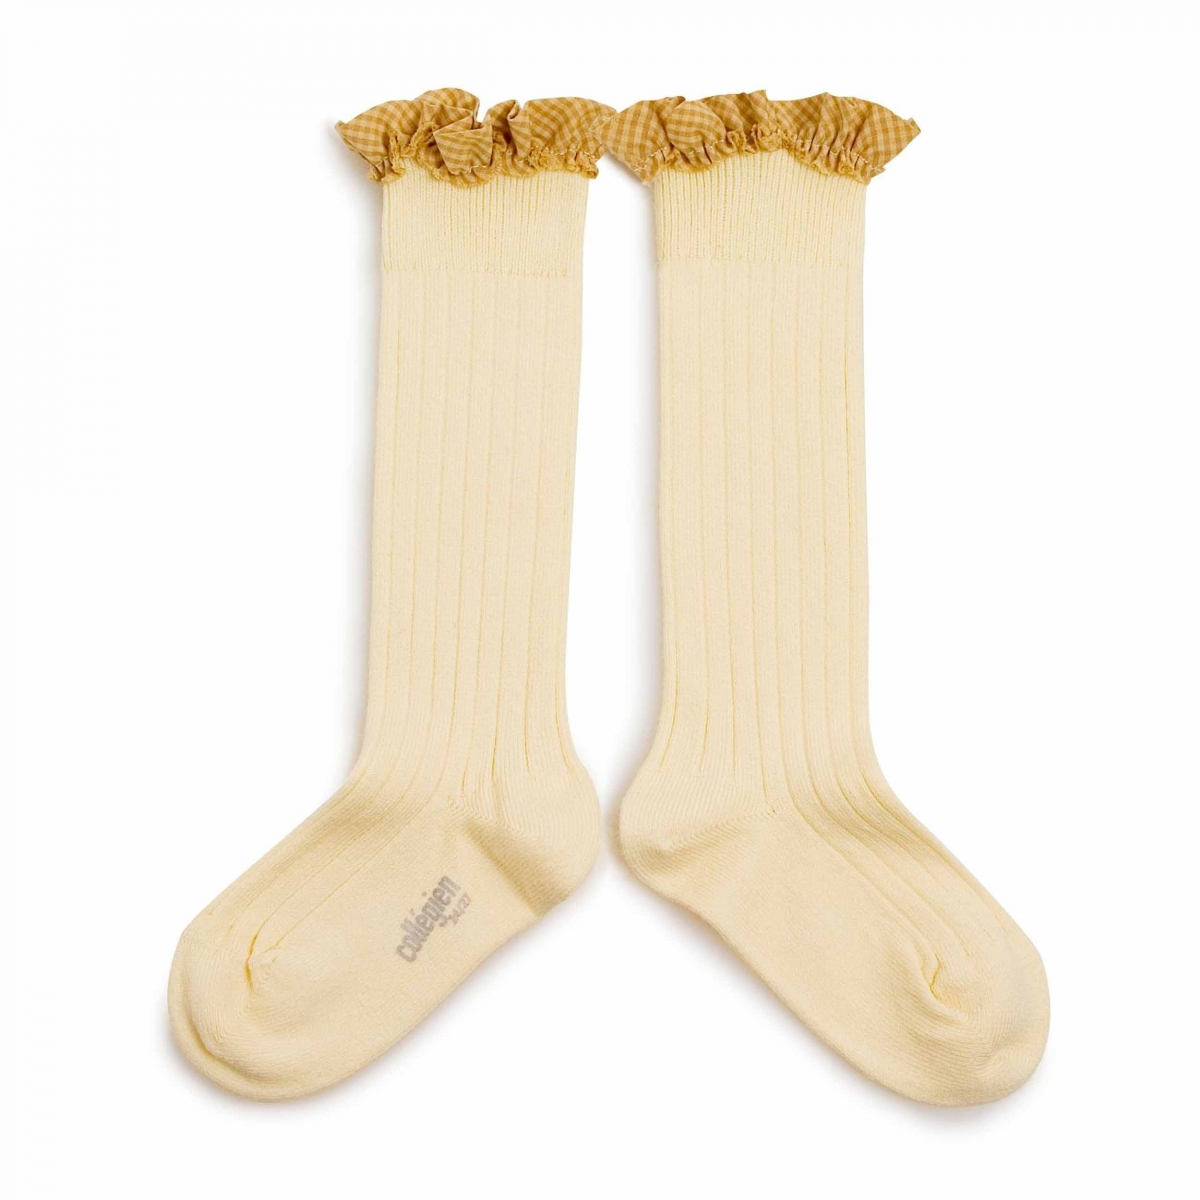 Collégien - Knee high socks Apolline vanille - タイツと靴下 - 2961 039 Apolline 